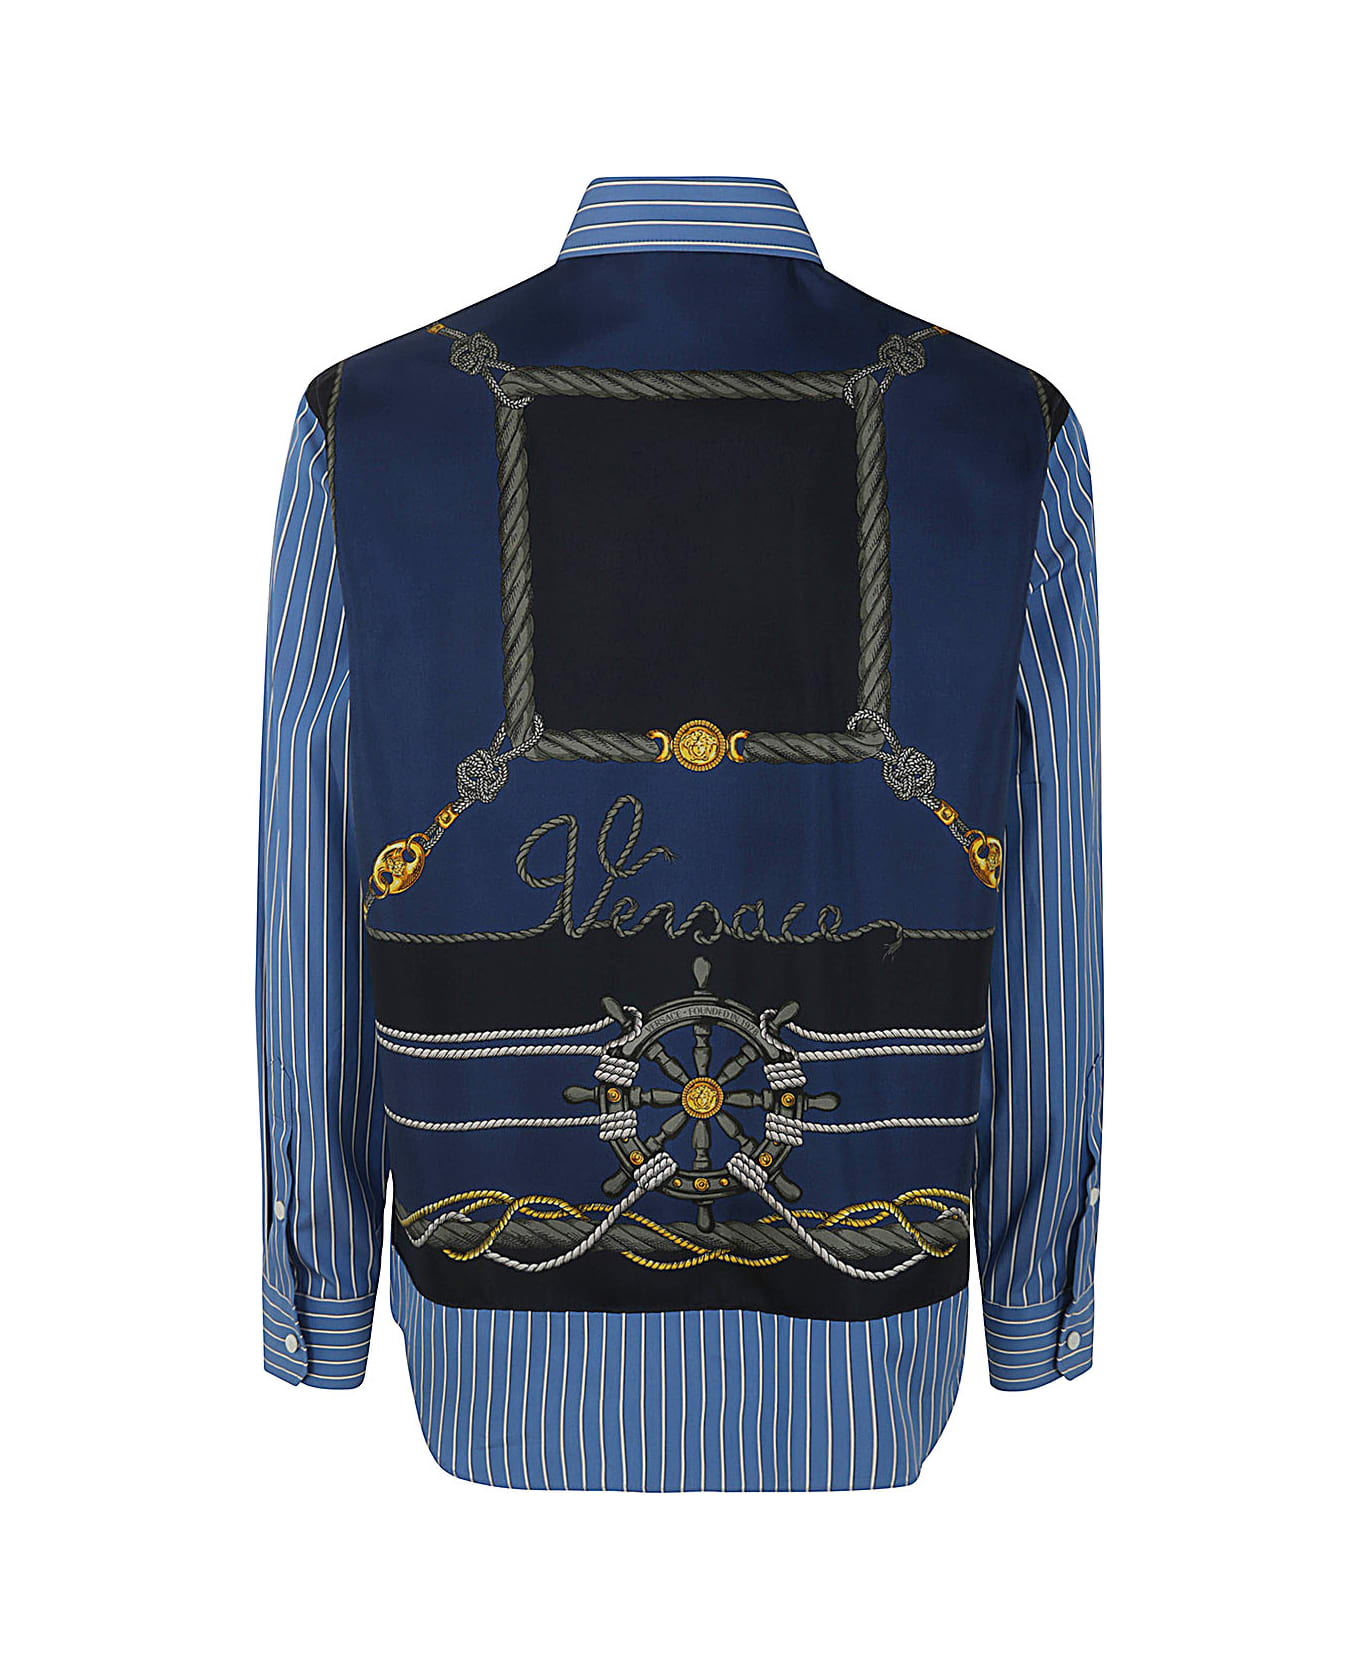 Versace Informal Shirt Striped Poplin Fabric Printed Inserts - Blue Gold